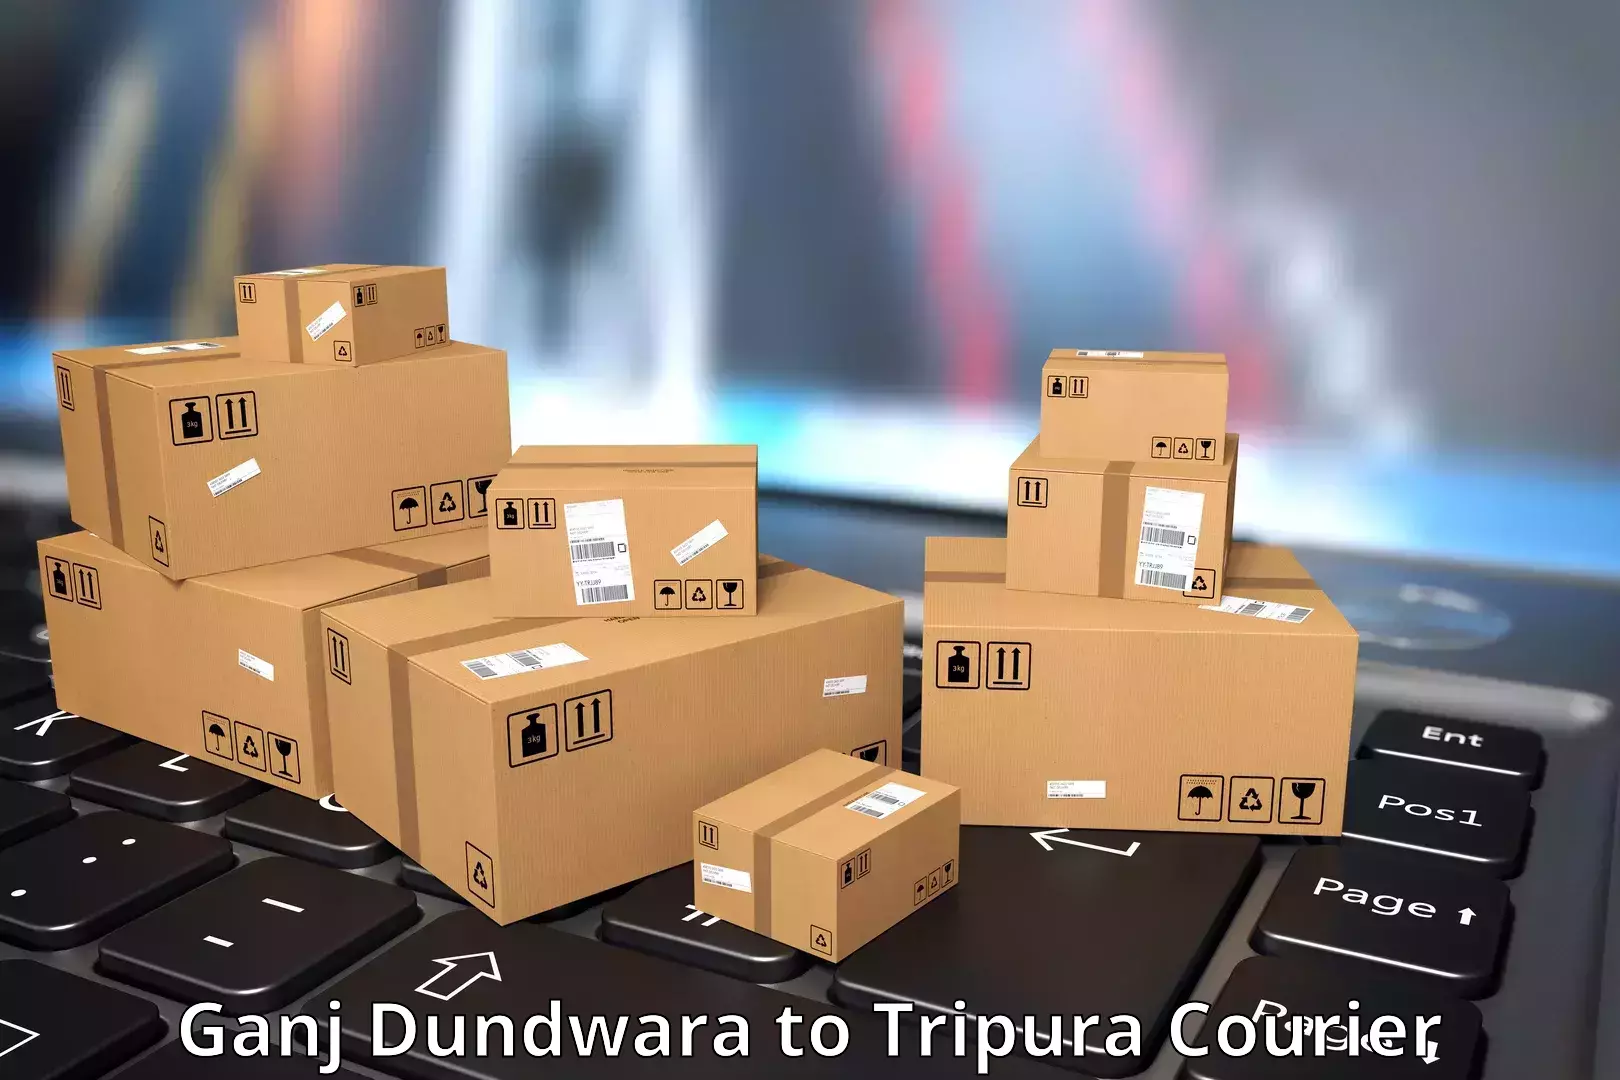 Full-service courier options Ganj Dundwara to Udaipur Tripura